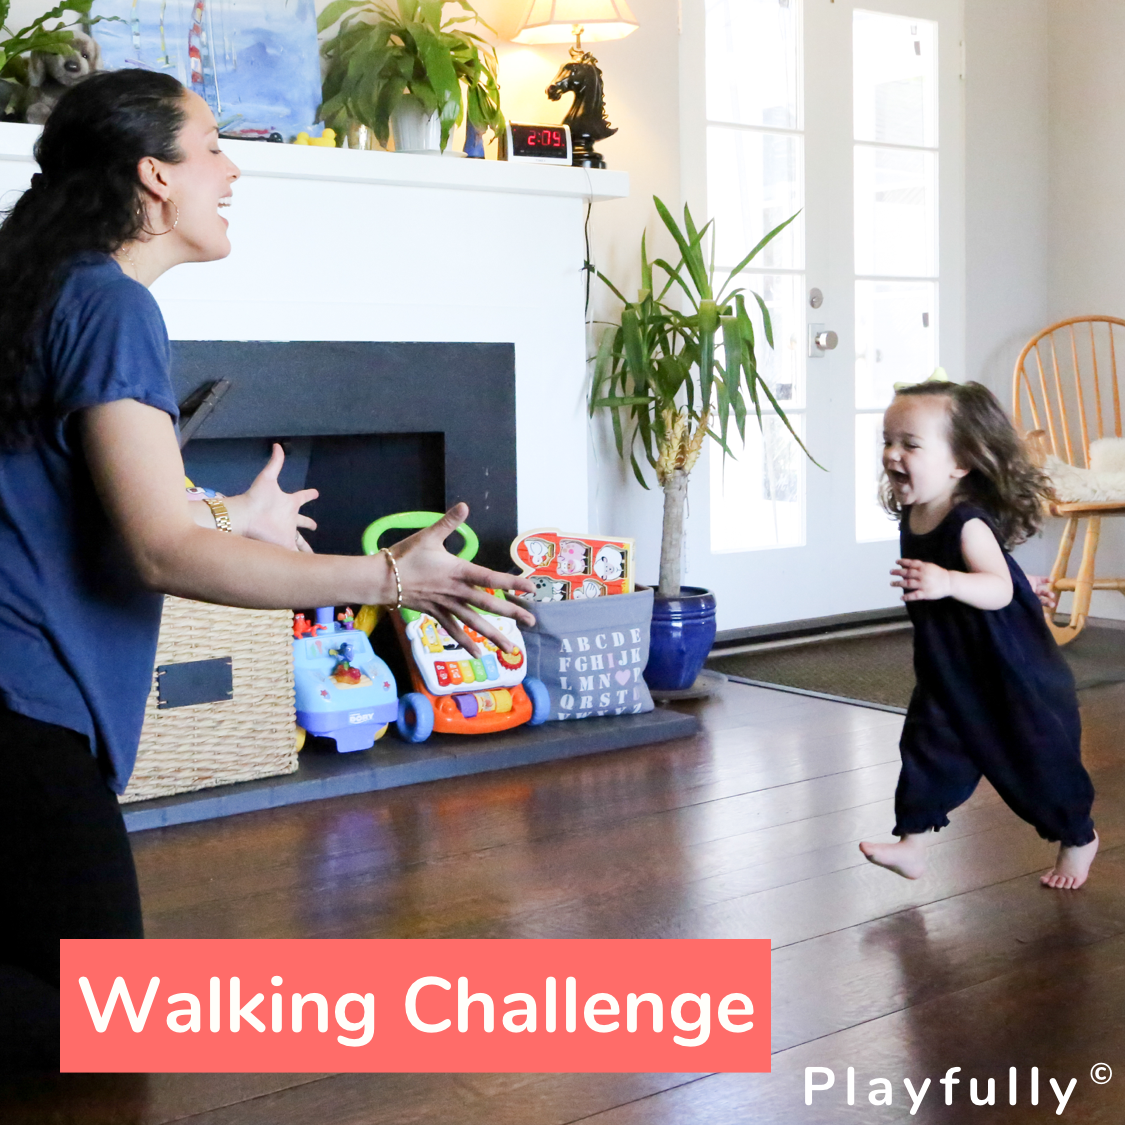 ways to teach baby to walk